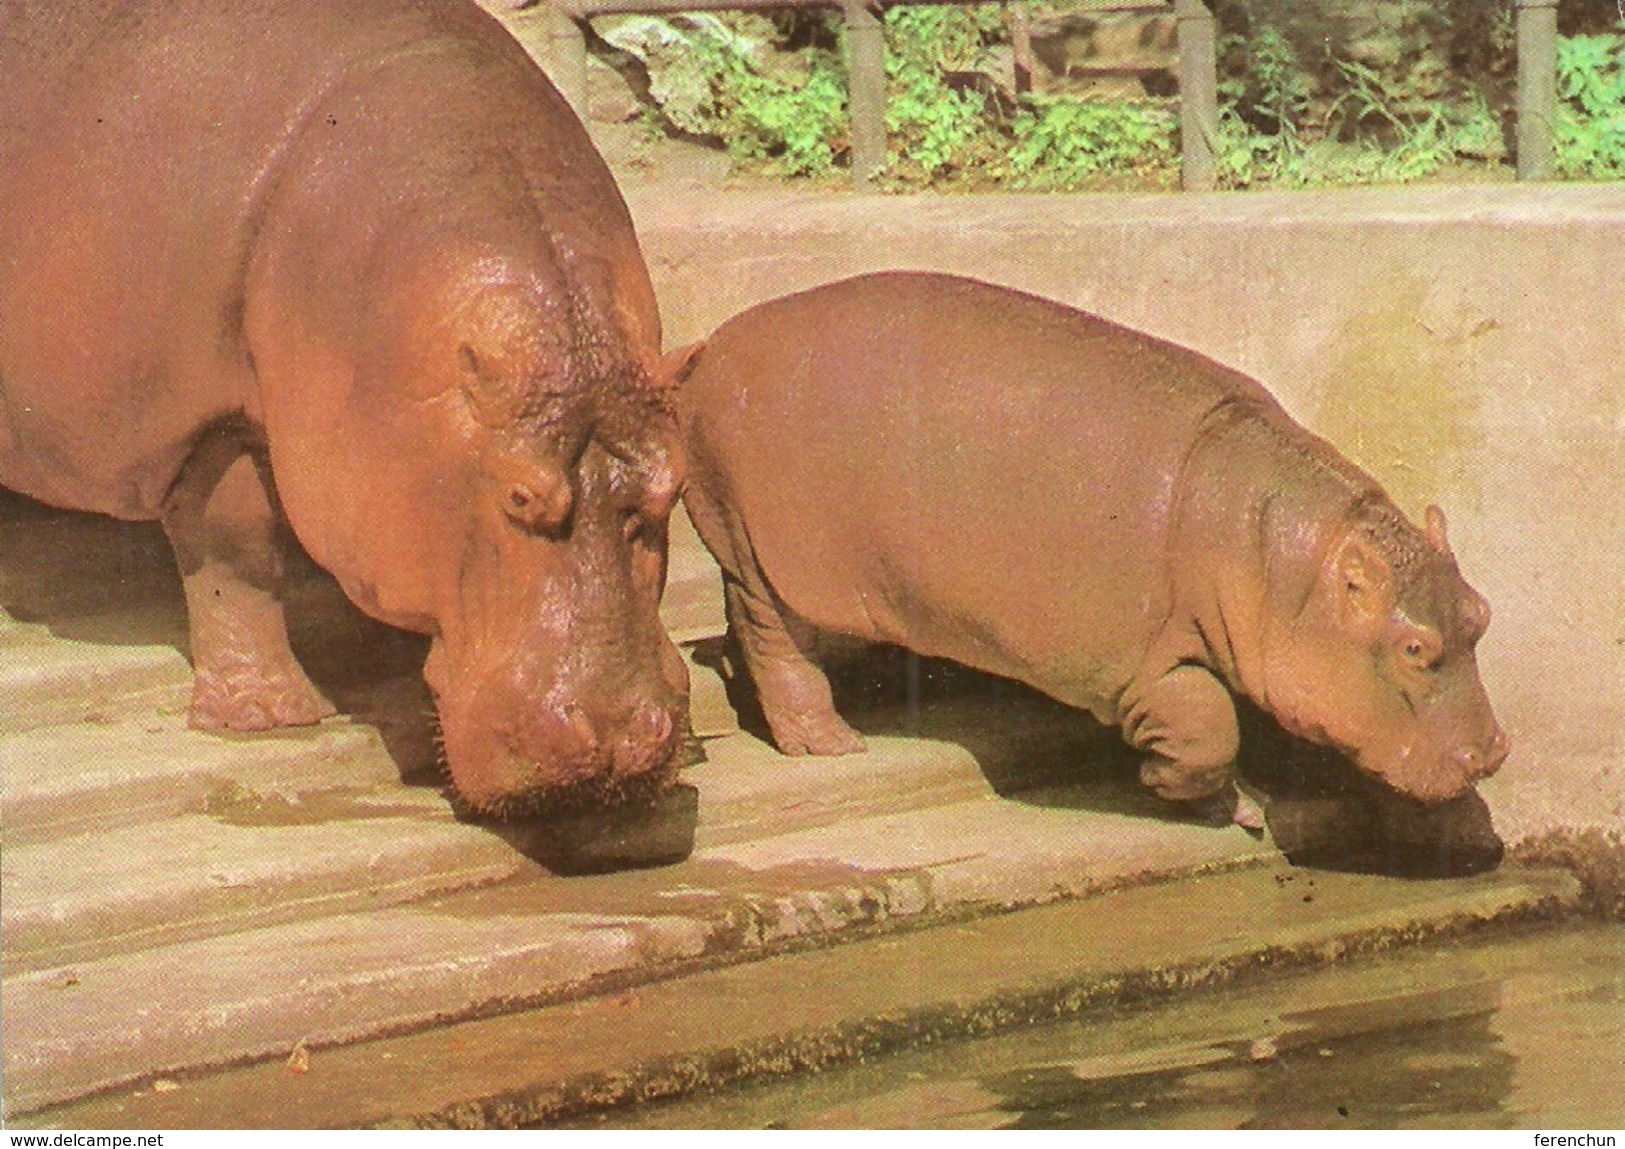 HIPPOPOTAMUS * BABY HIPPO * ANIMAL * ZOO & BOTANICAL GARDEN * BUDAPEST * KAK 0028 722 * Hungary - Nijlpaarden